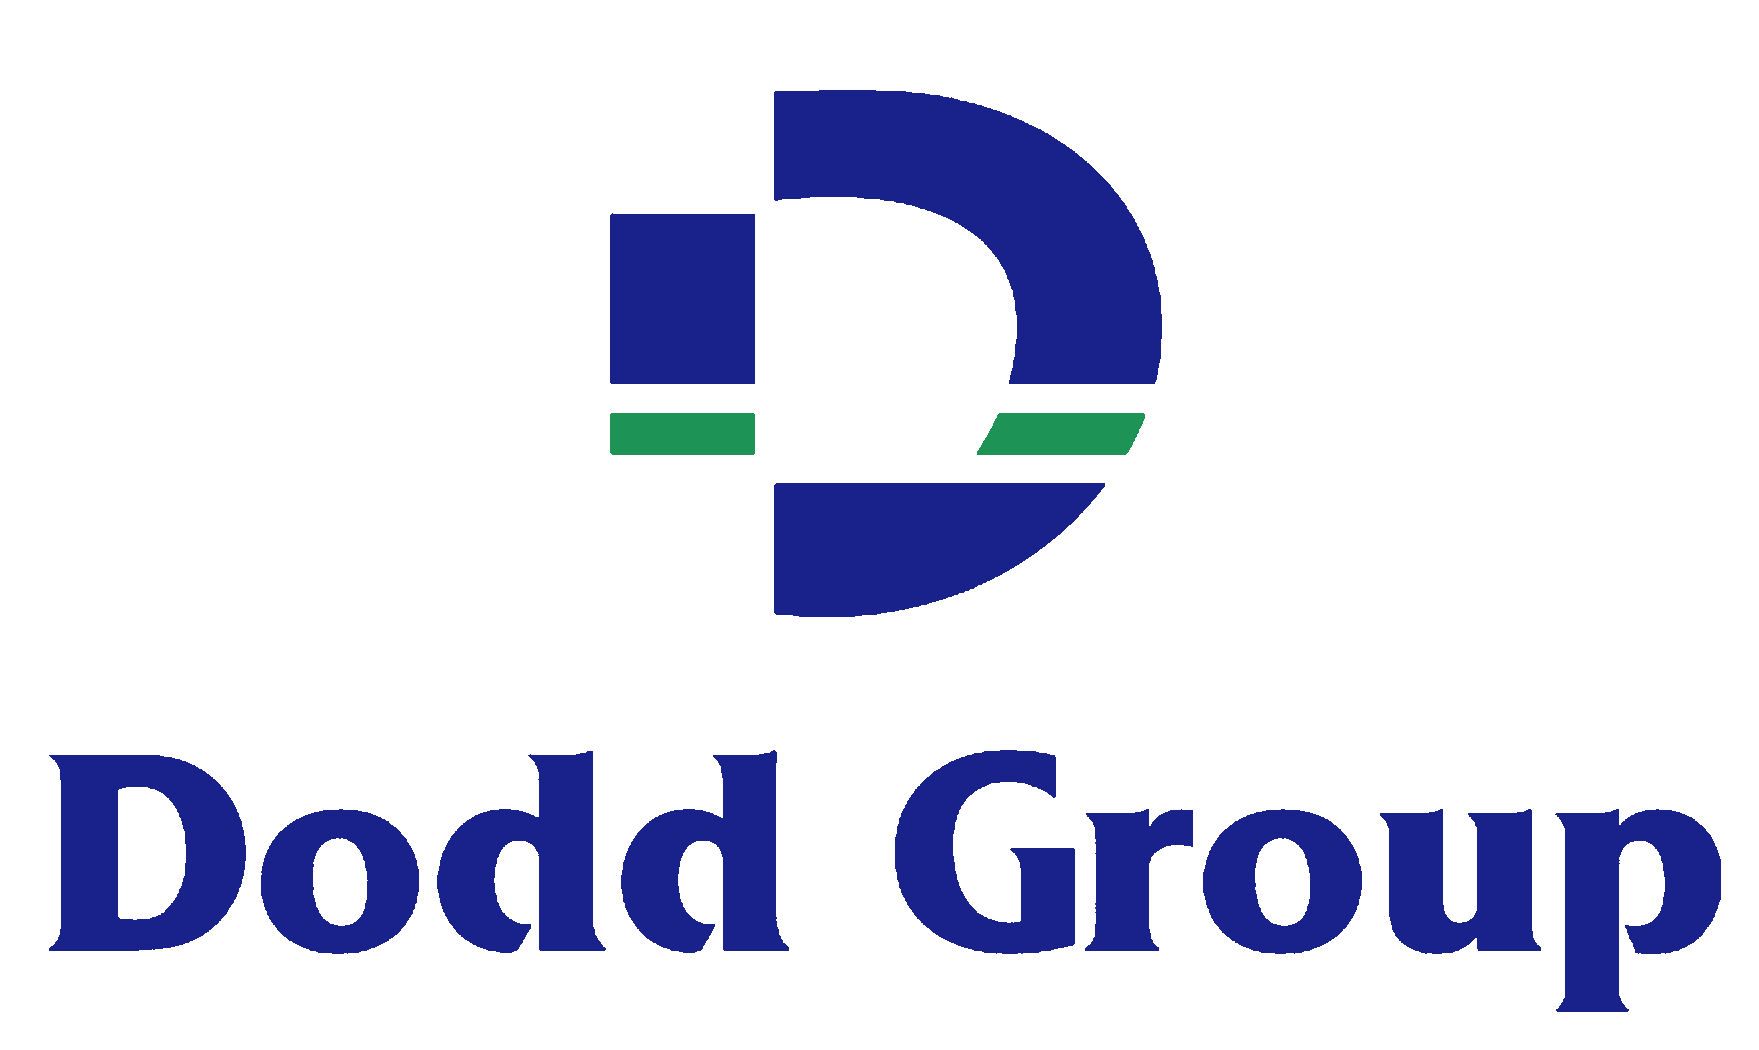 Dodd Group logo